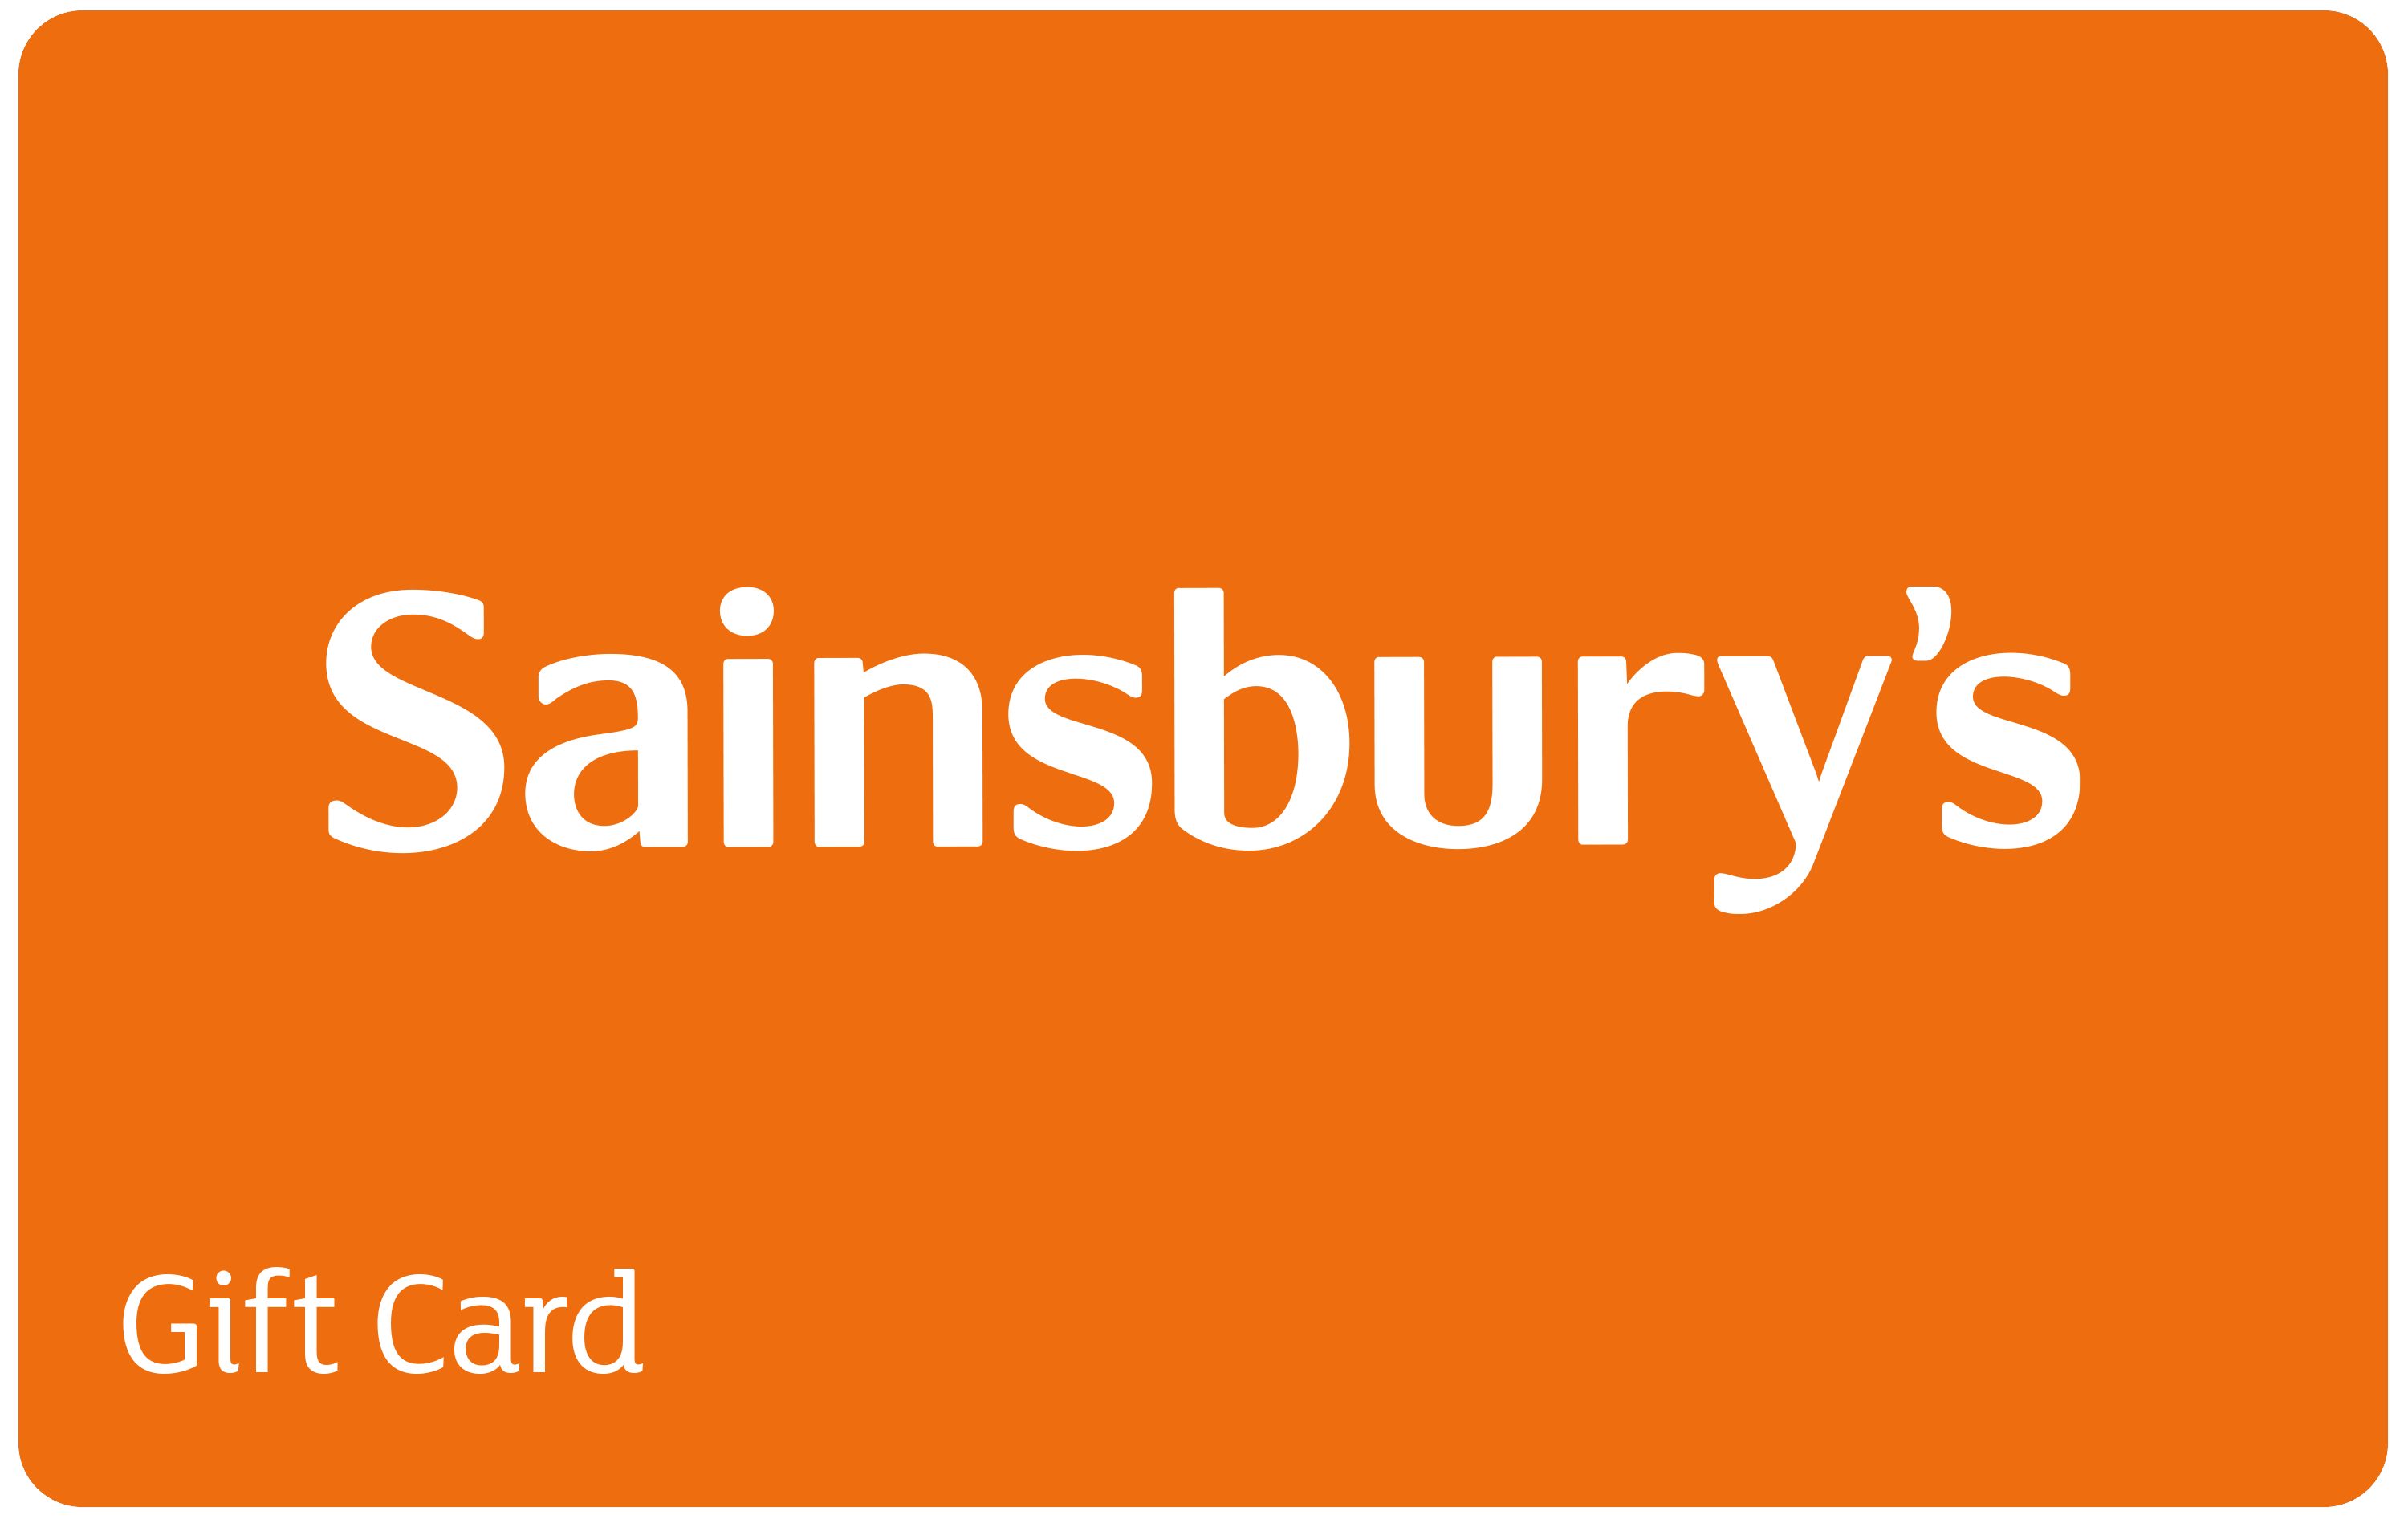 Sainsburys logo